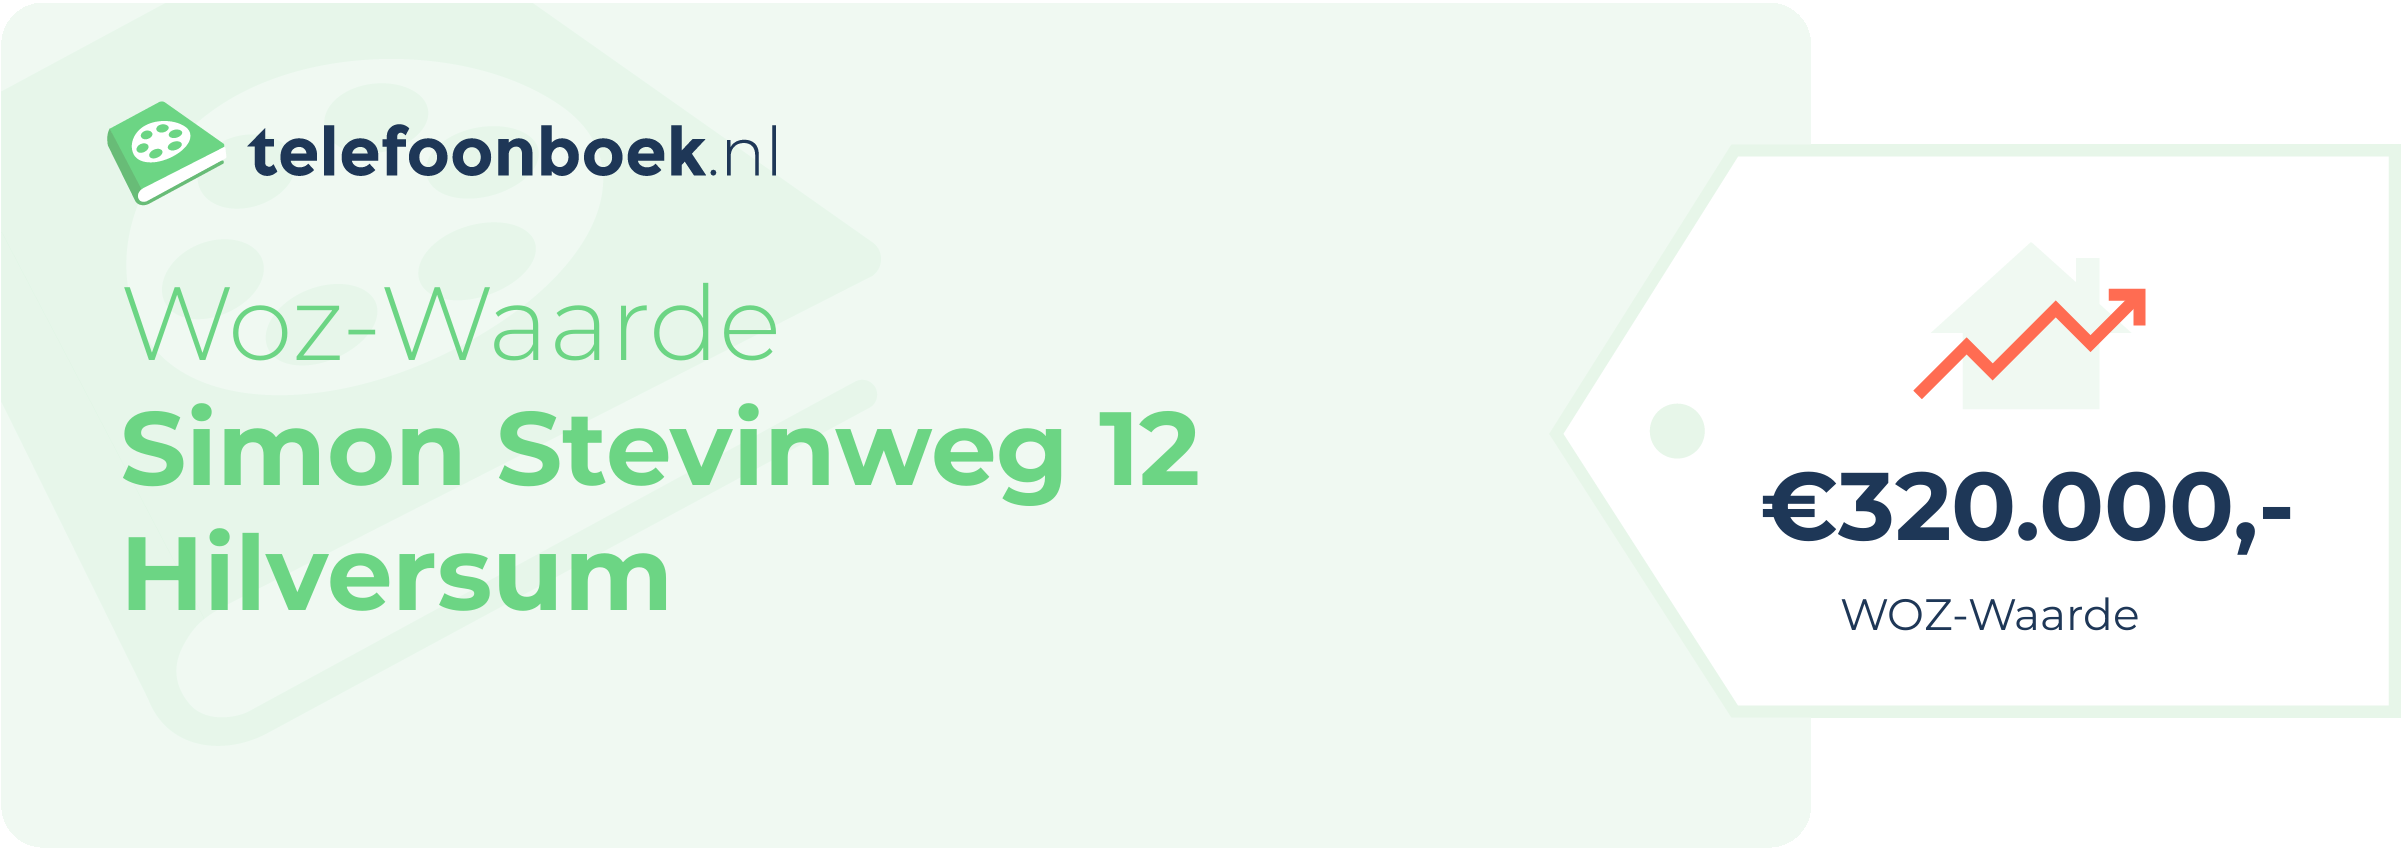 WOZ-waarde Simon Stevinweg 12 Hilversum